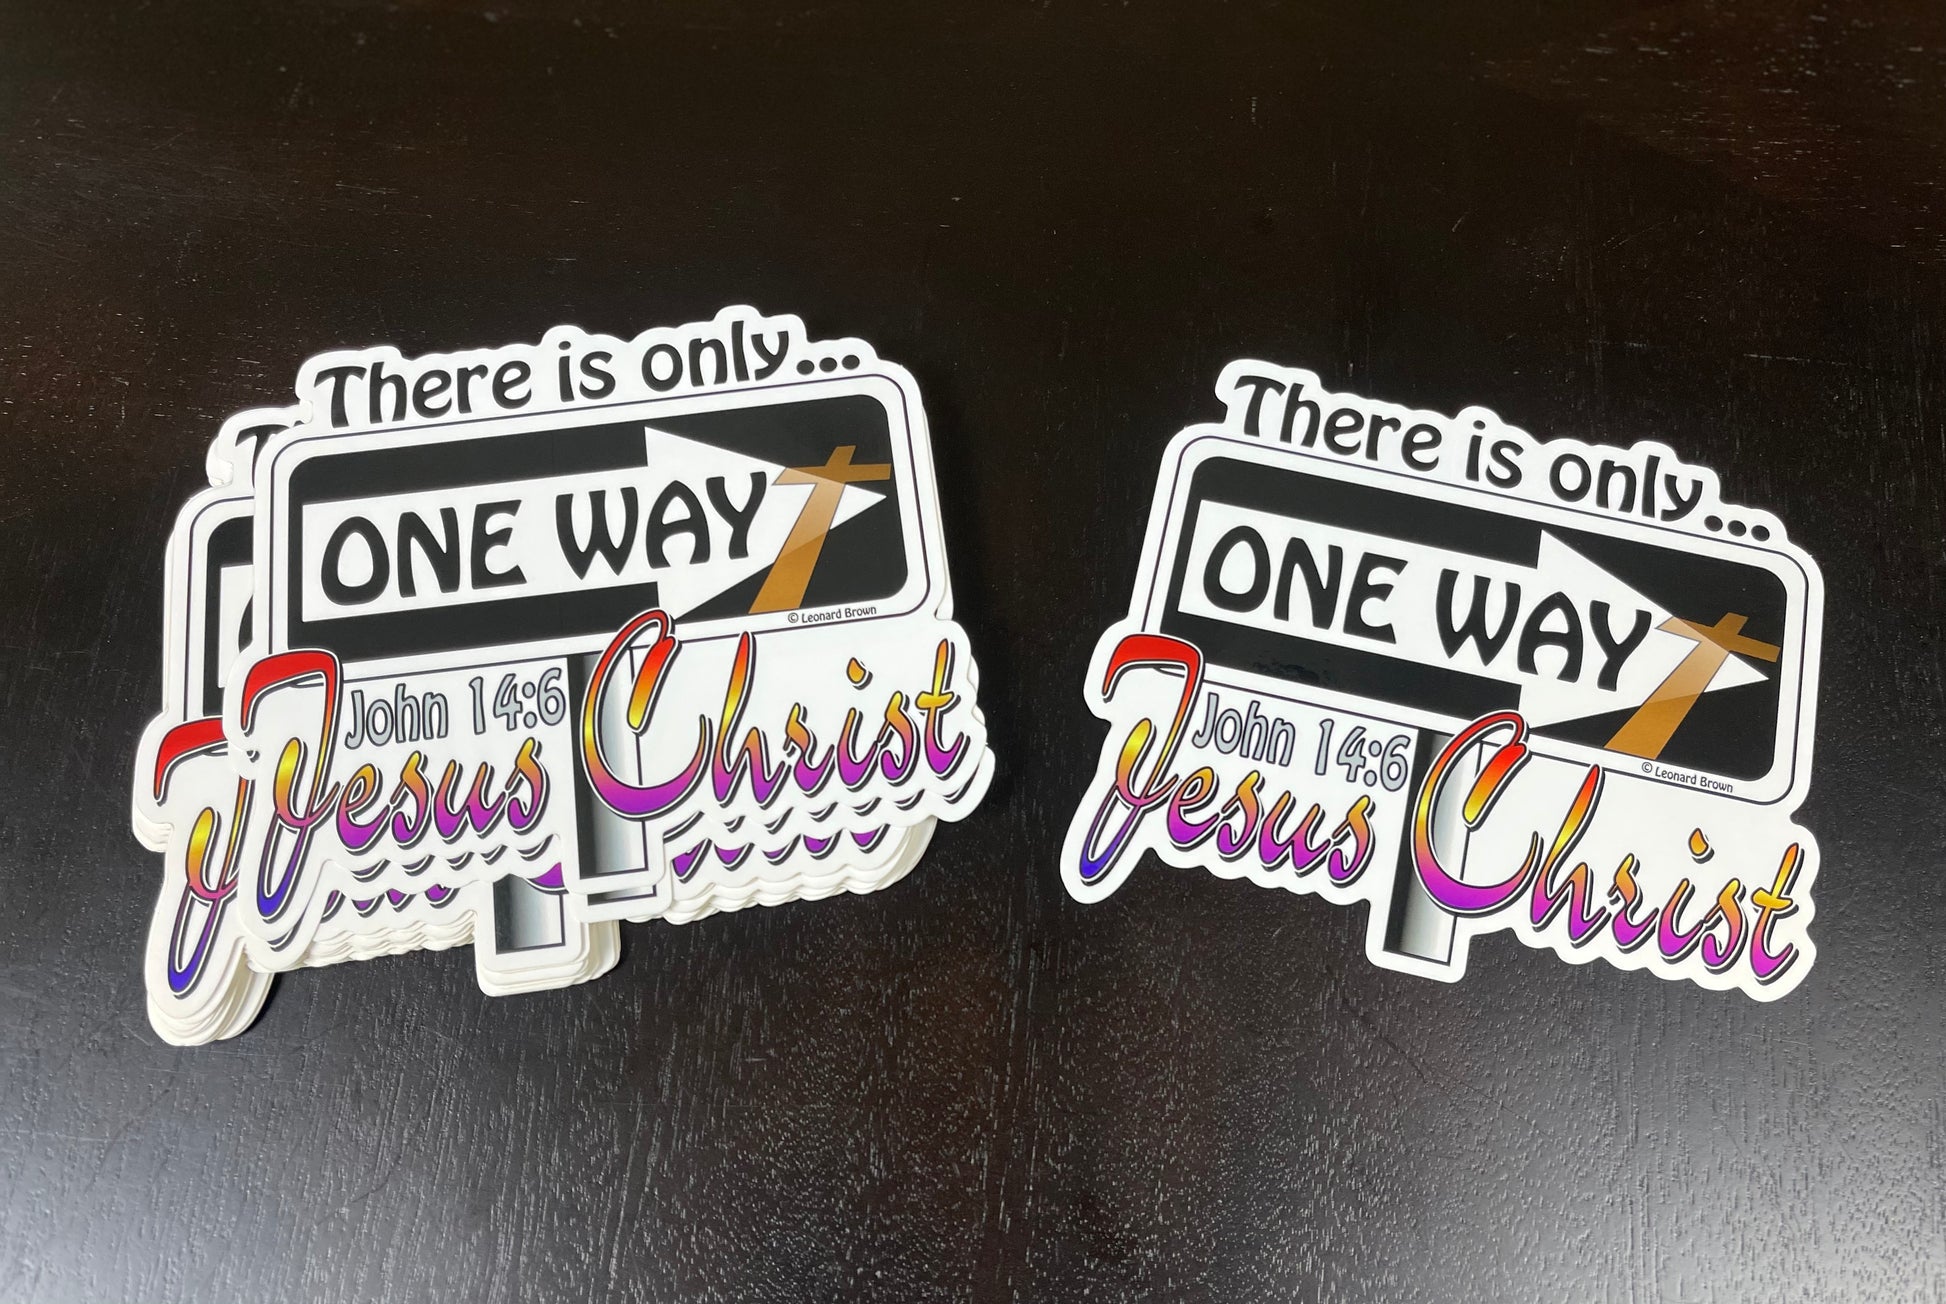 One Way stickers